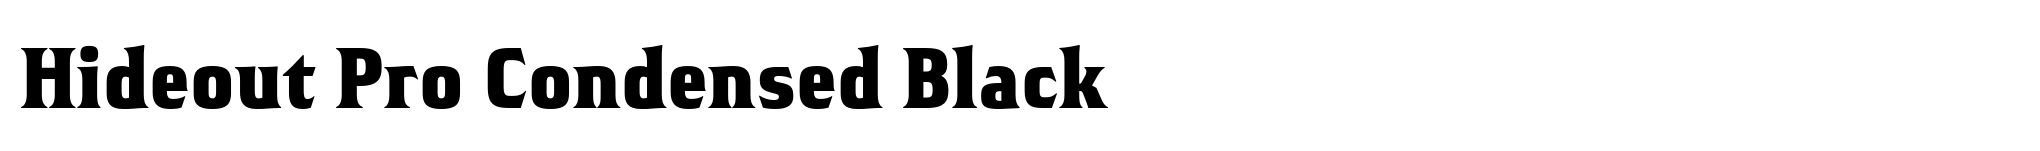 Hideout Pro Condensed Black image